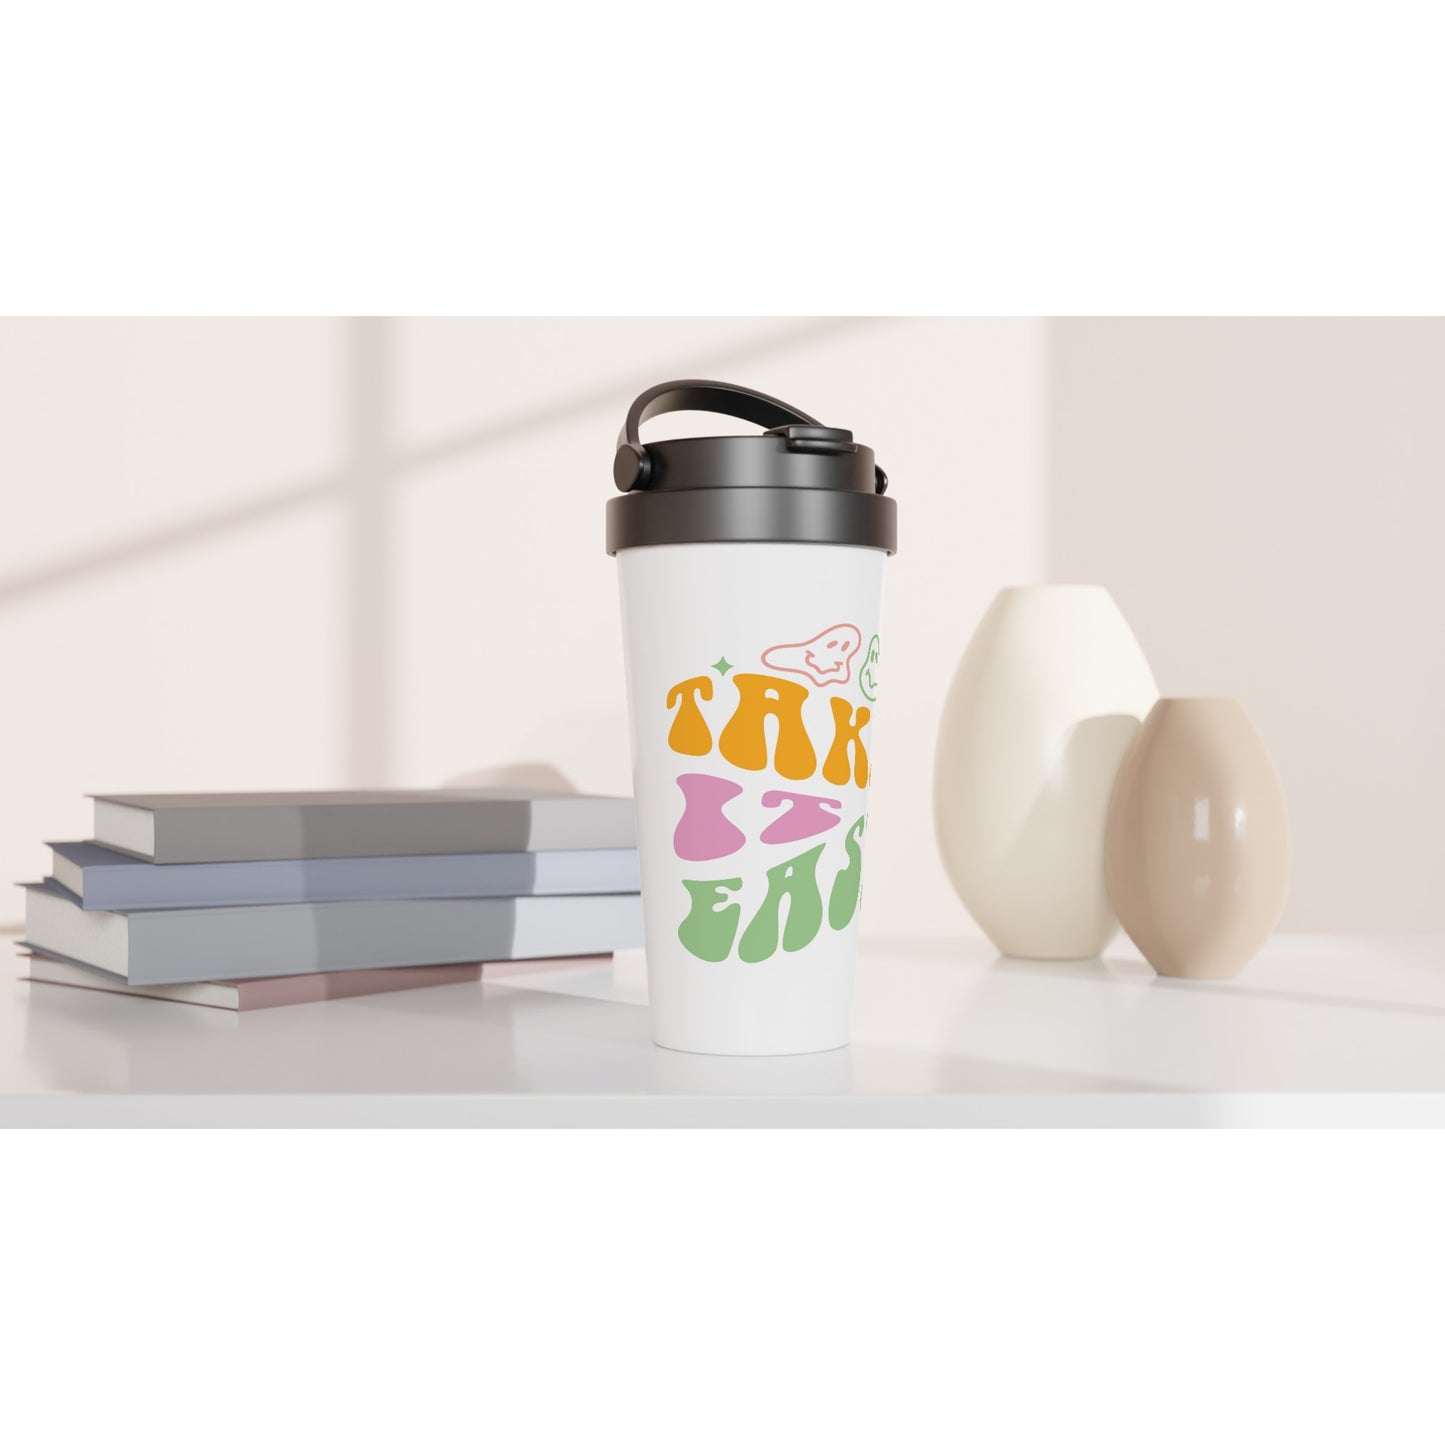 Take It Easy - White 15oz Stainless Steel Travel Mug